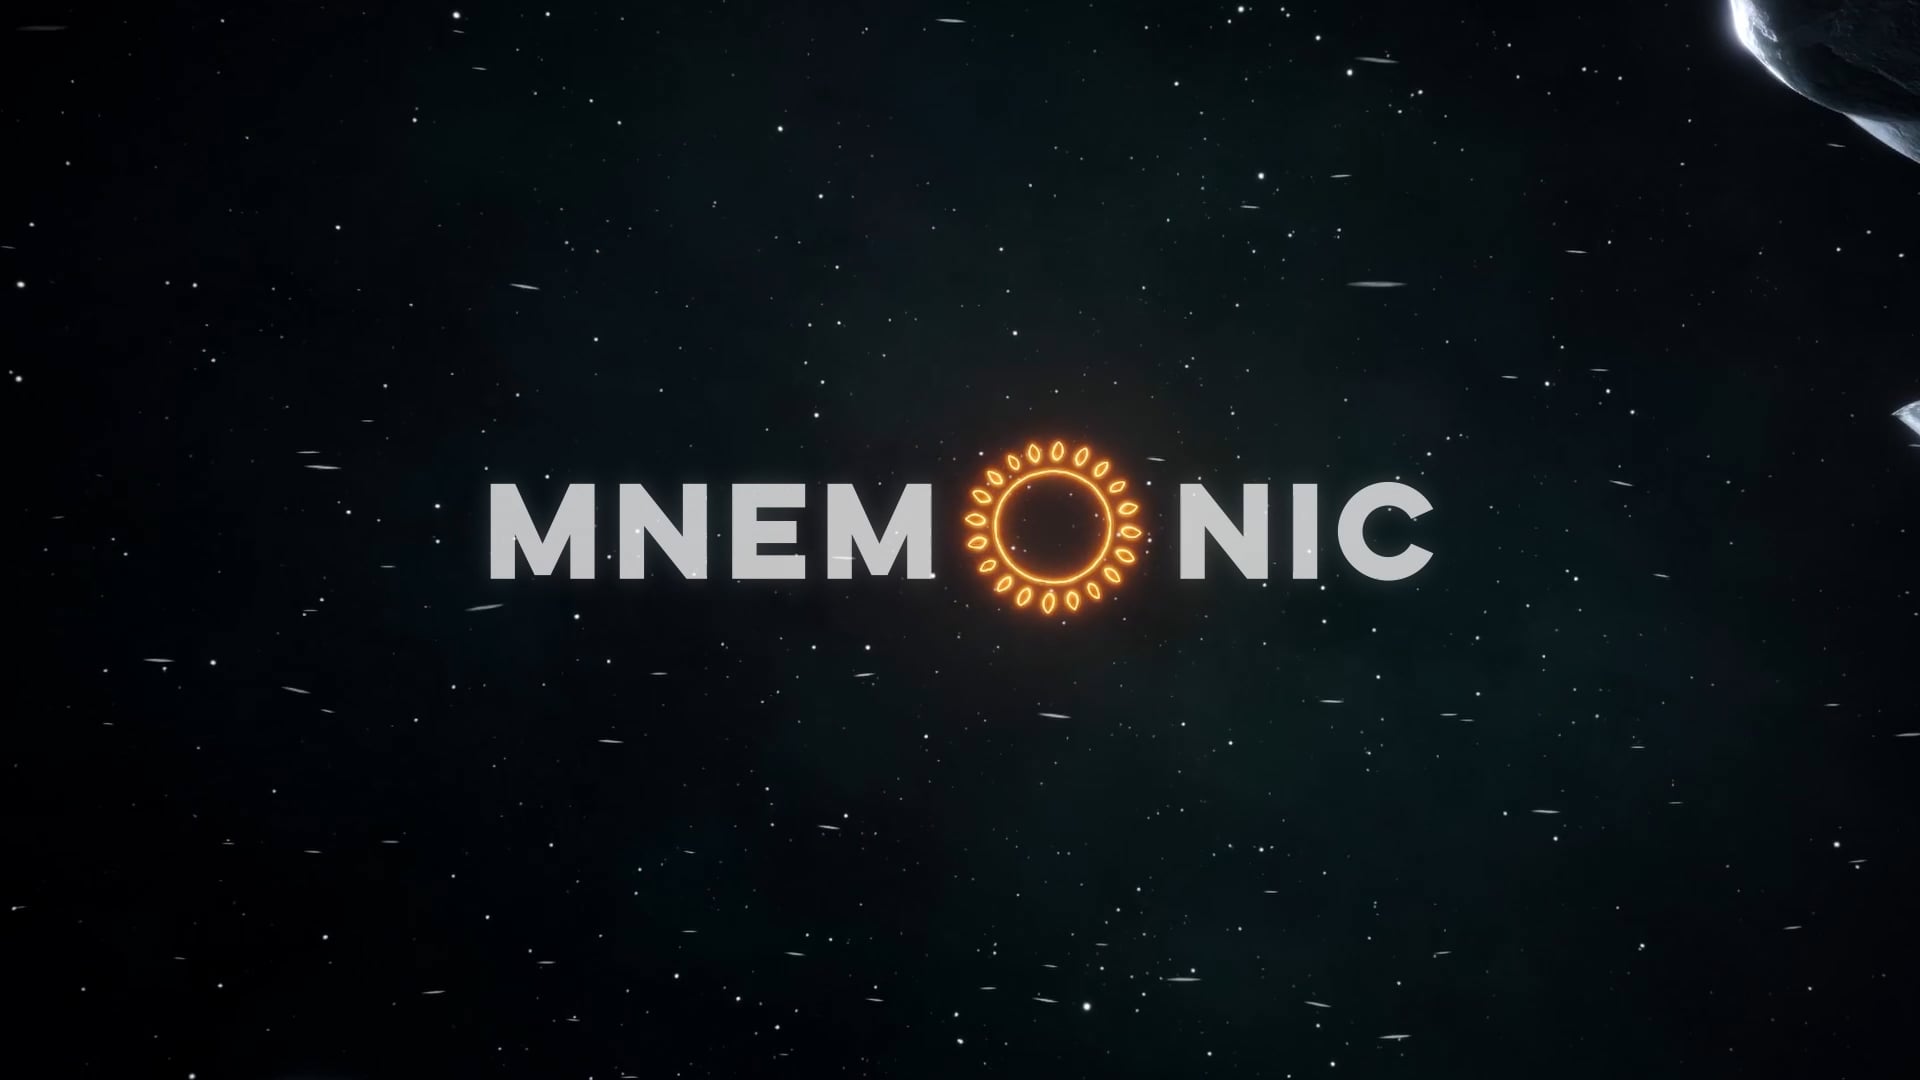 Mnemonic Play Trailer on Vimeo